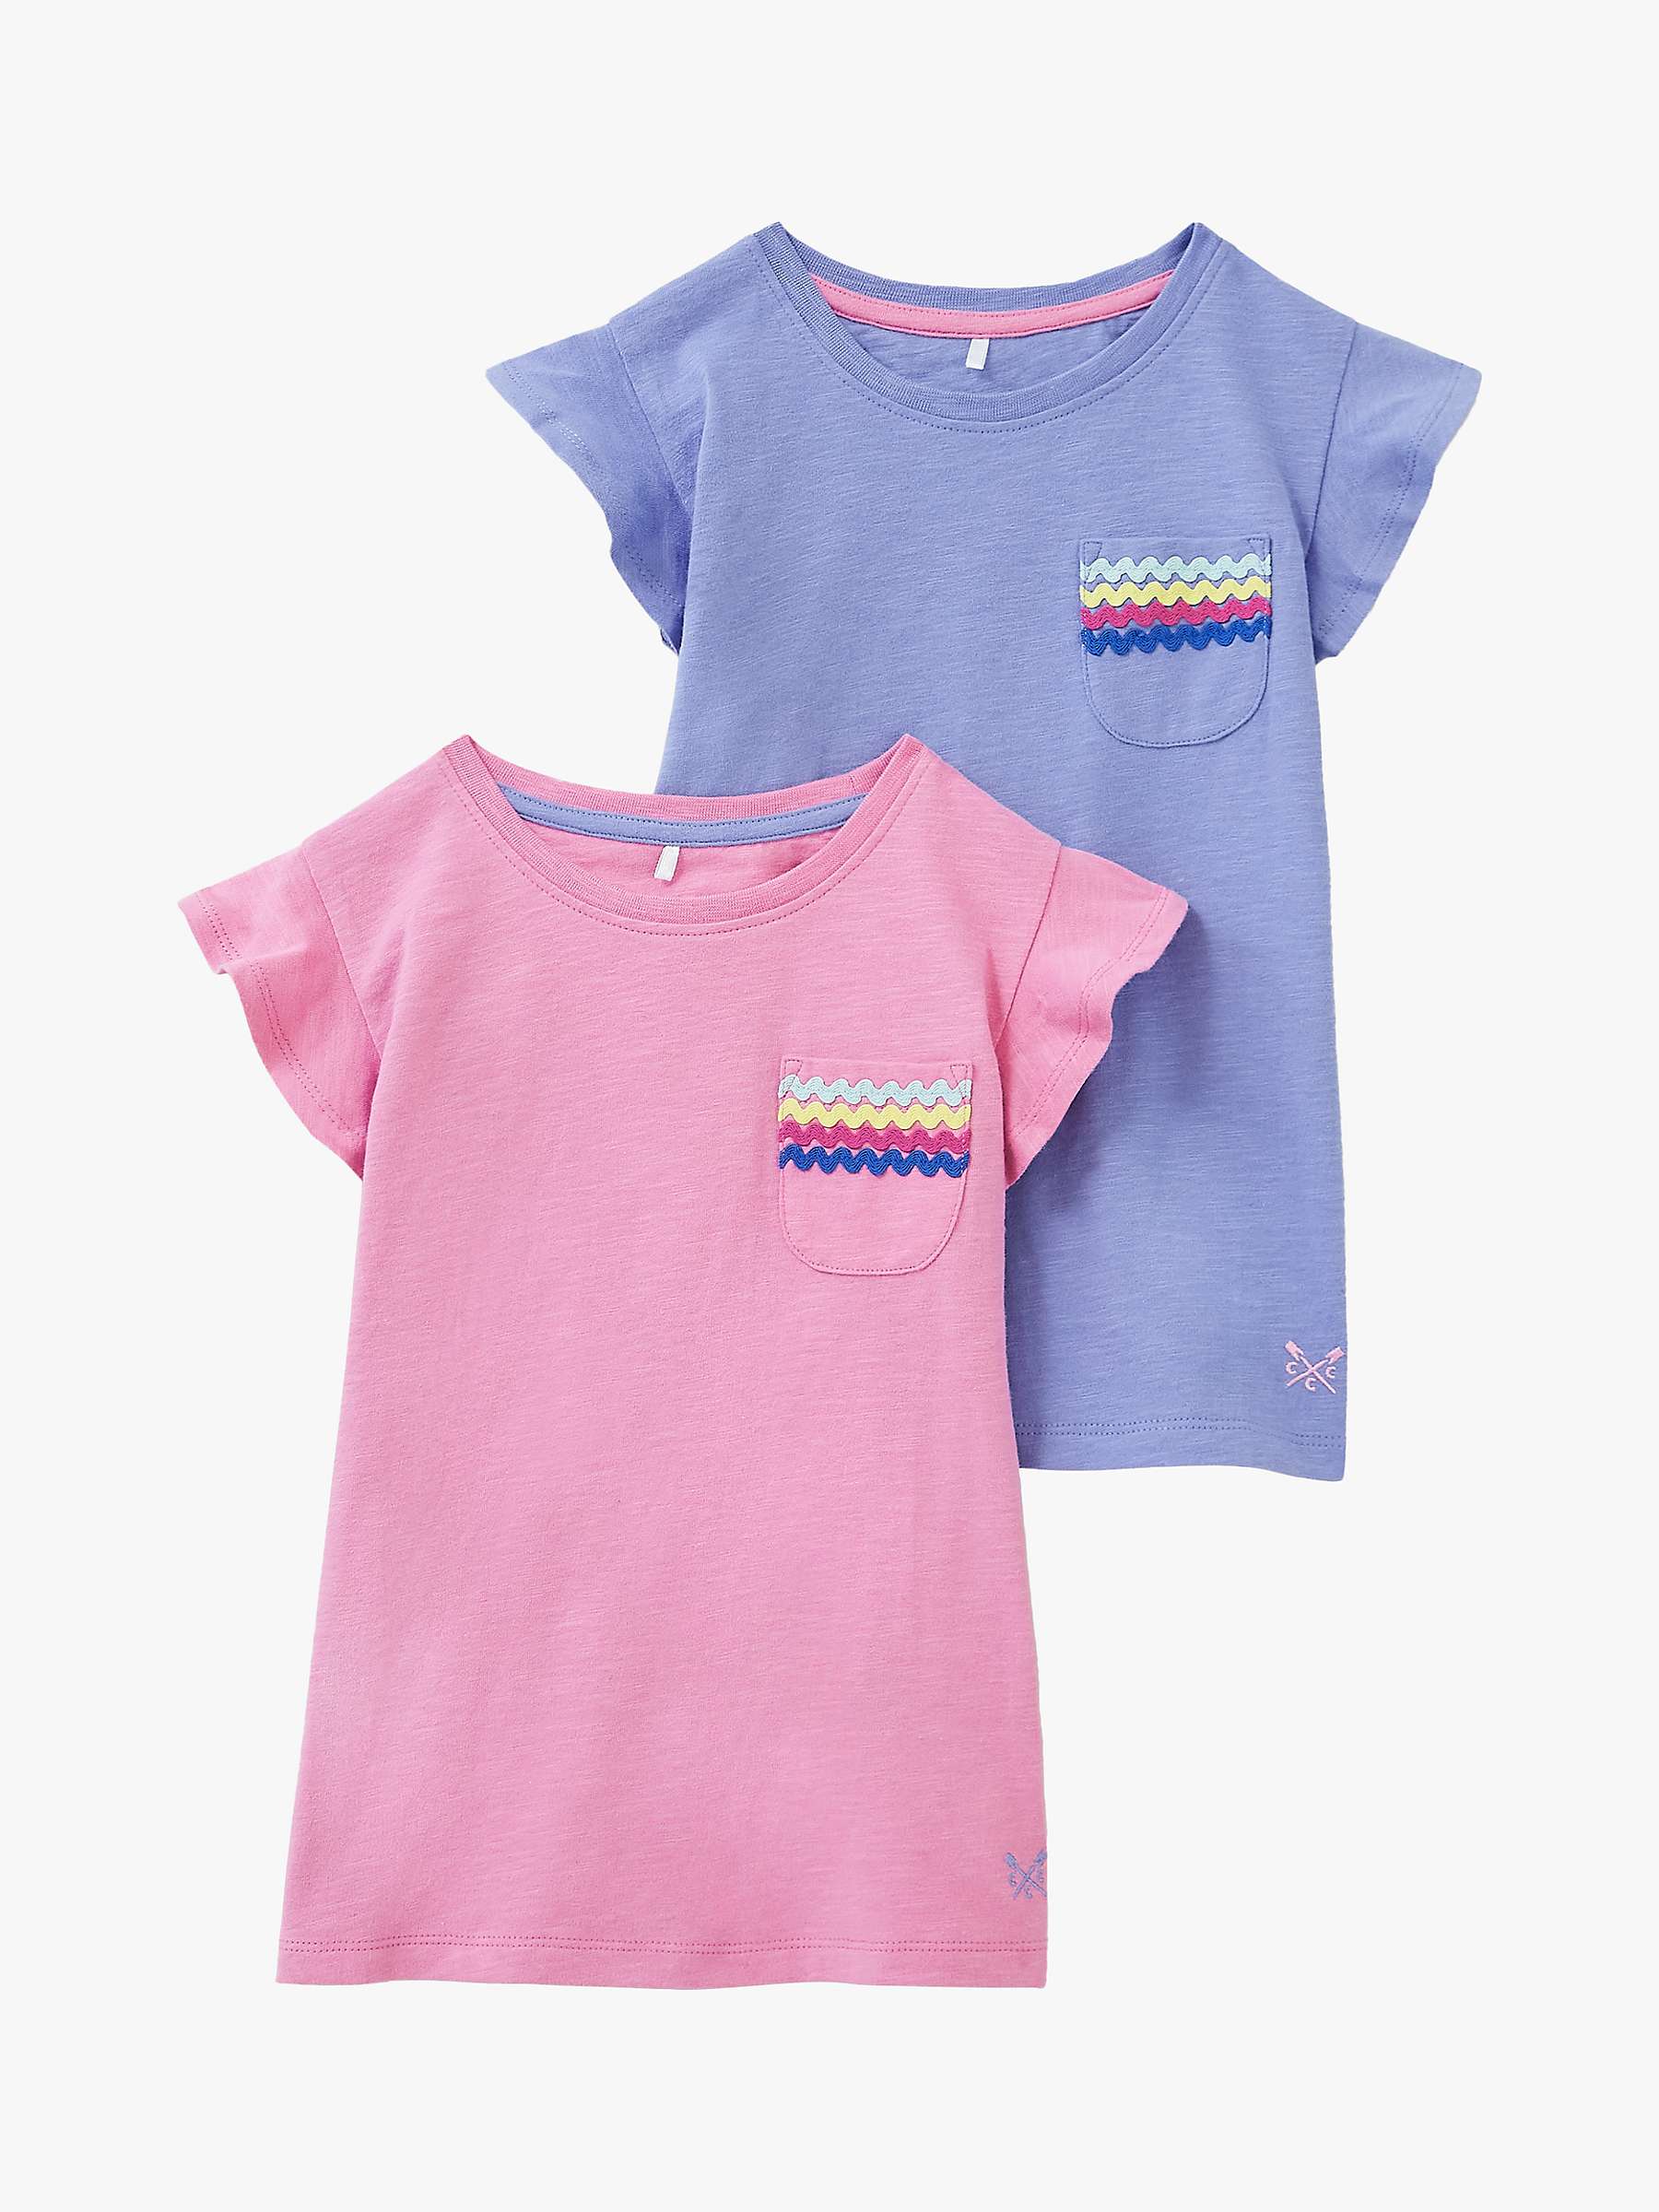 Buy Crew Clothing Kids' Ric-Rac Trim T-Shirts, Pack of 2, Pink/Purple Online at johnlewis.com